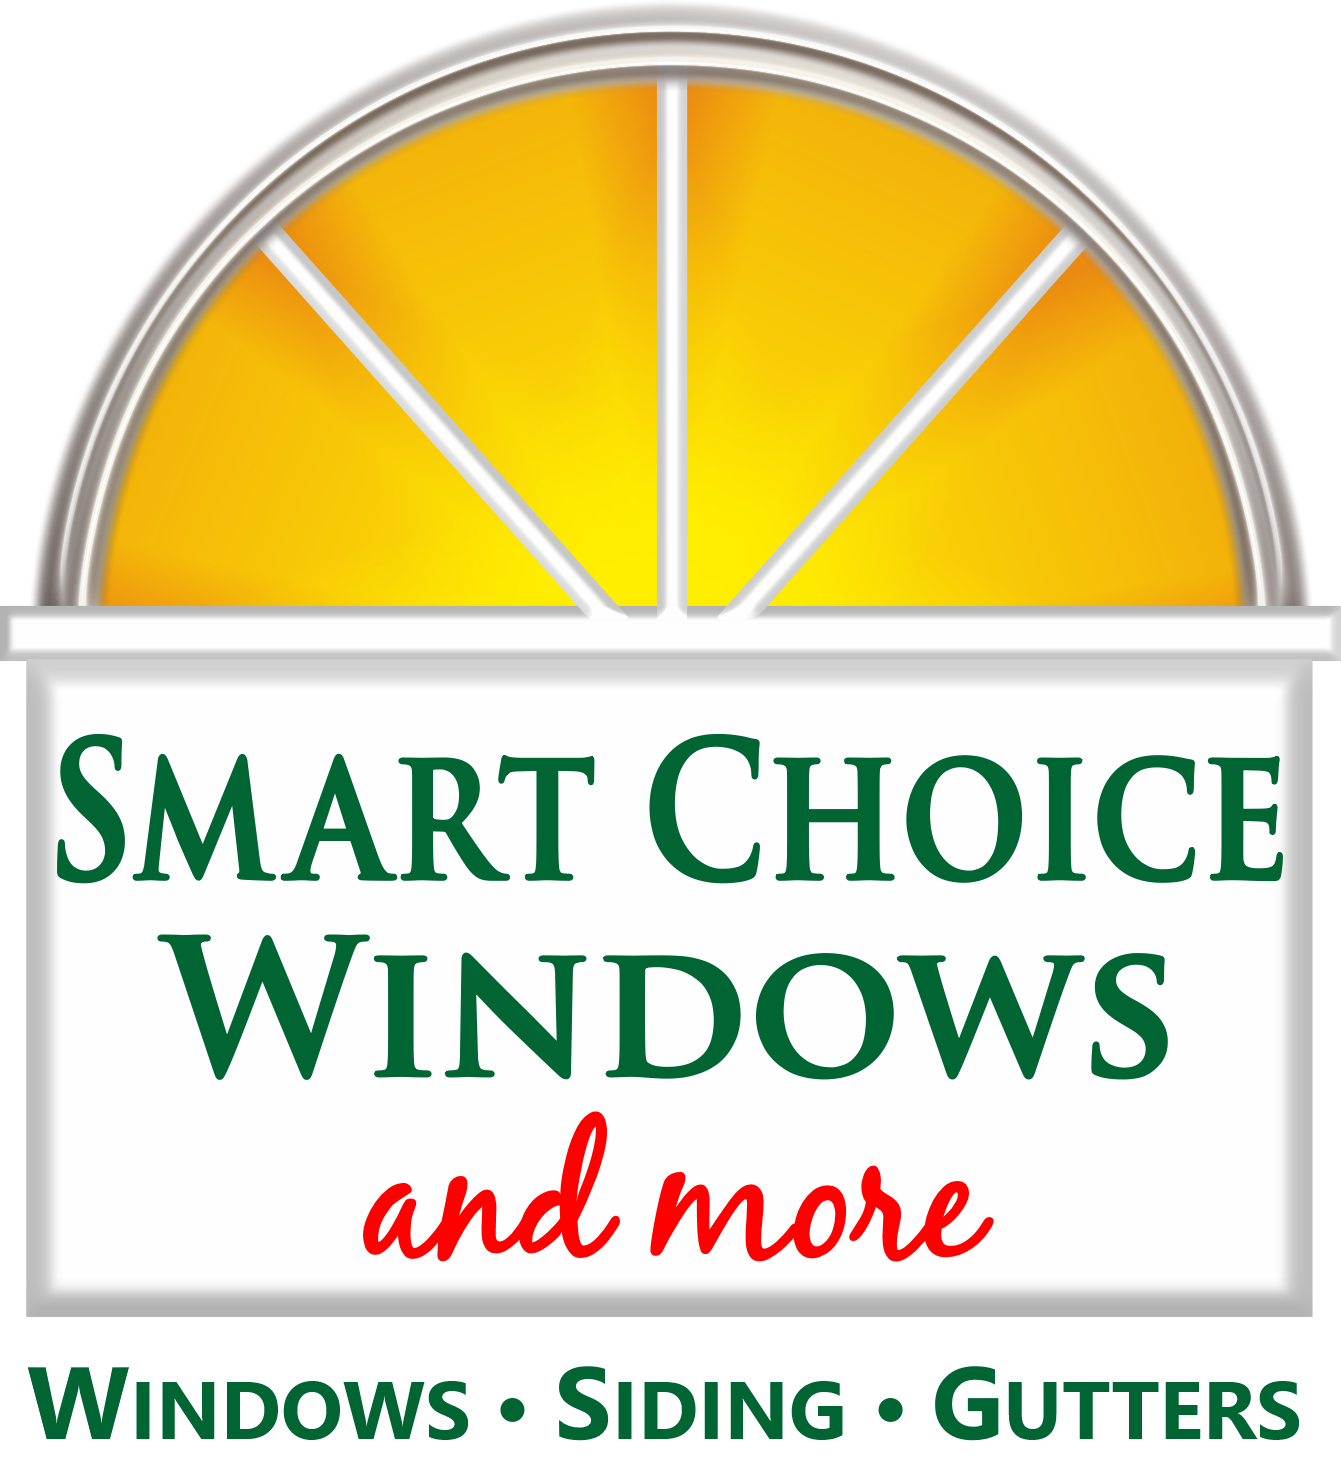 Smart-choice-windows-and-more-logo